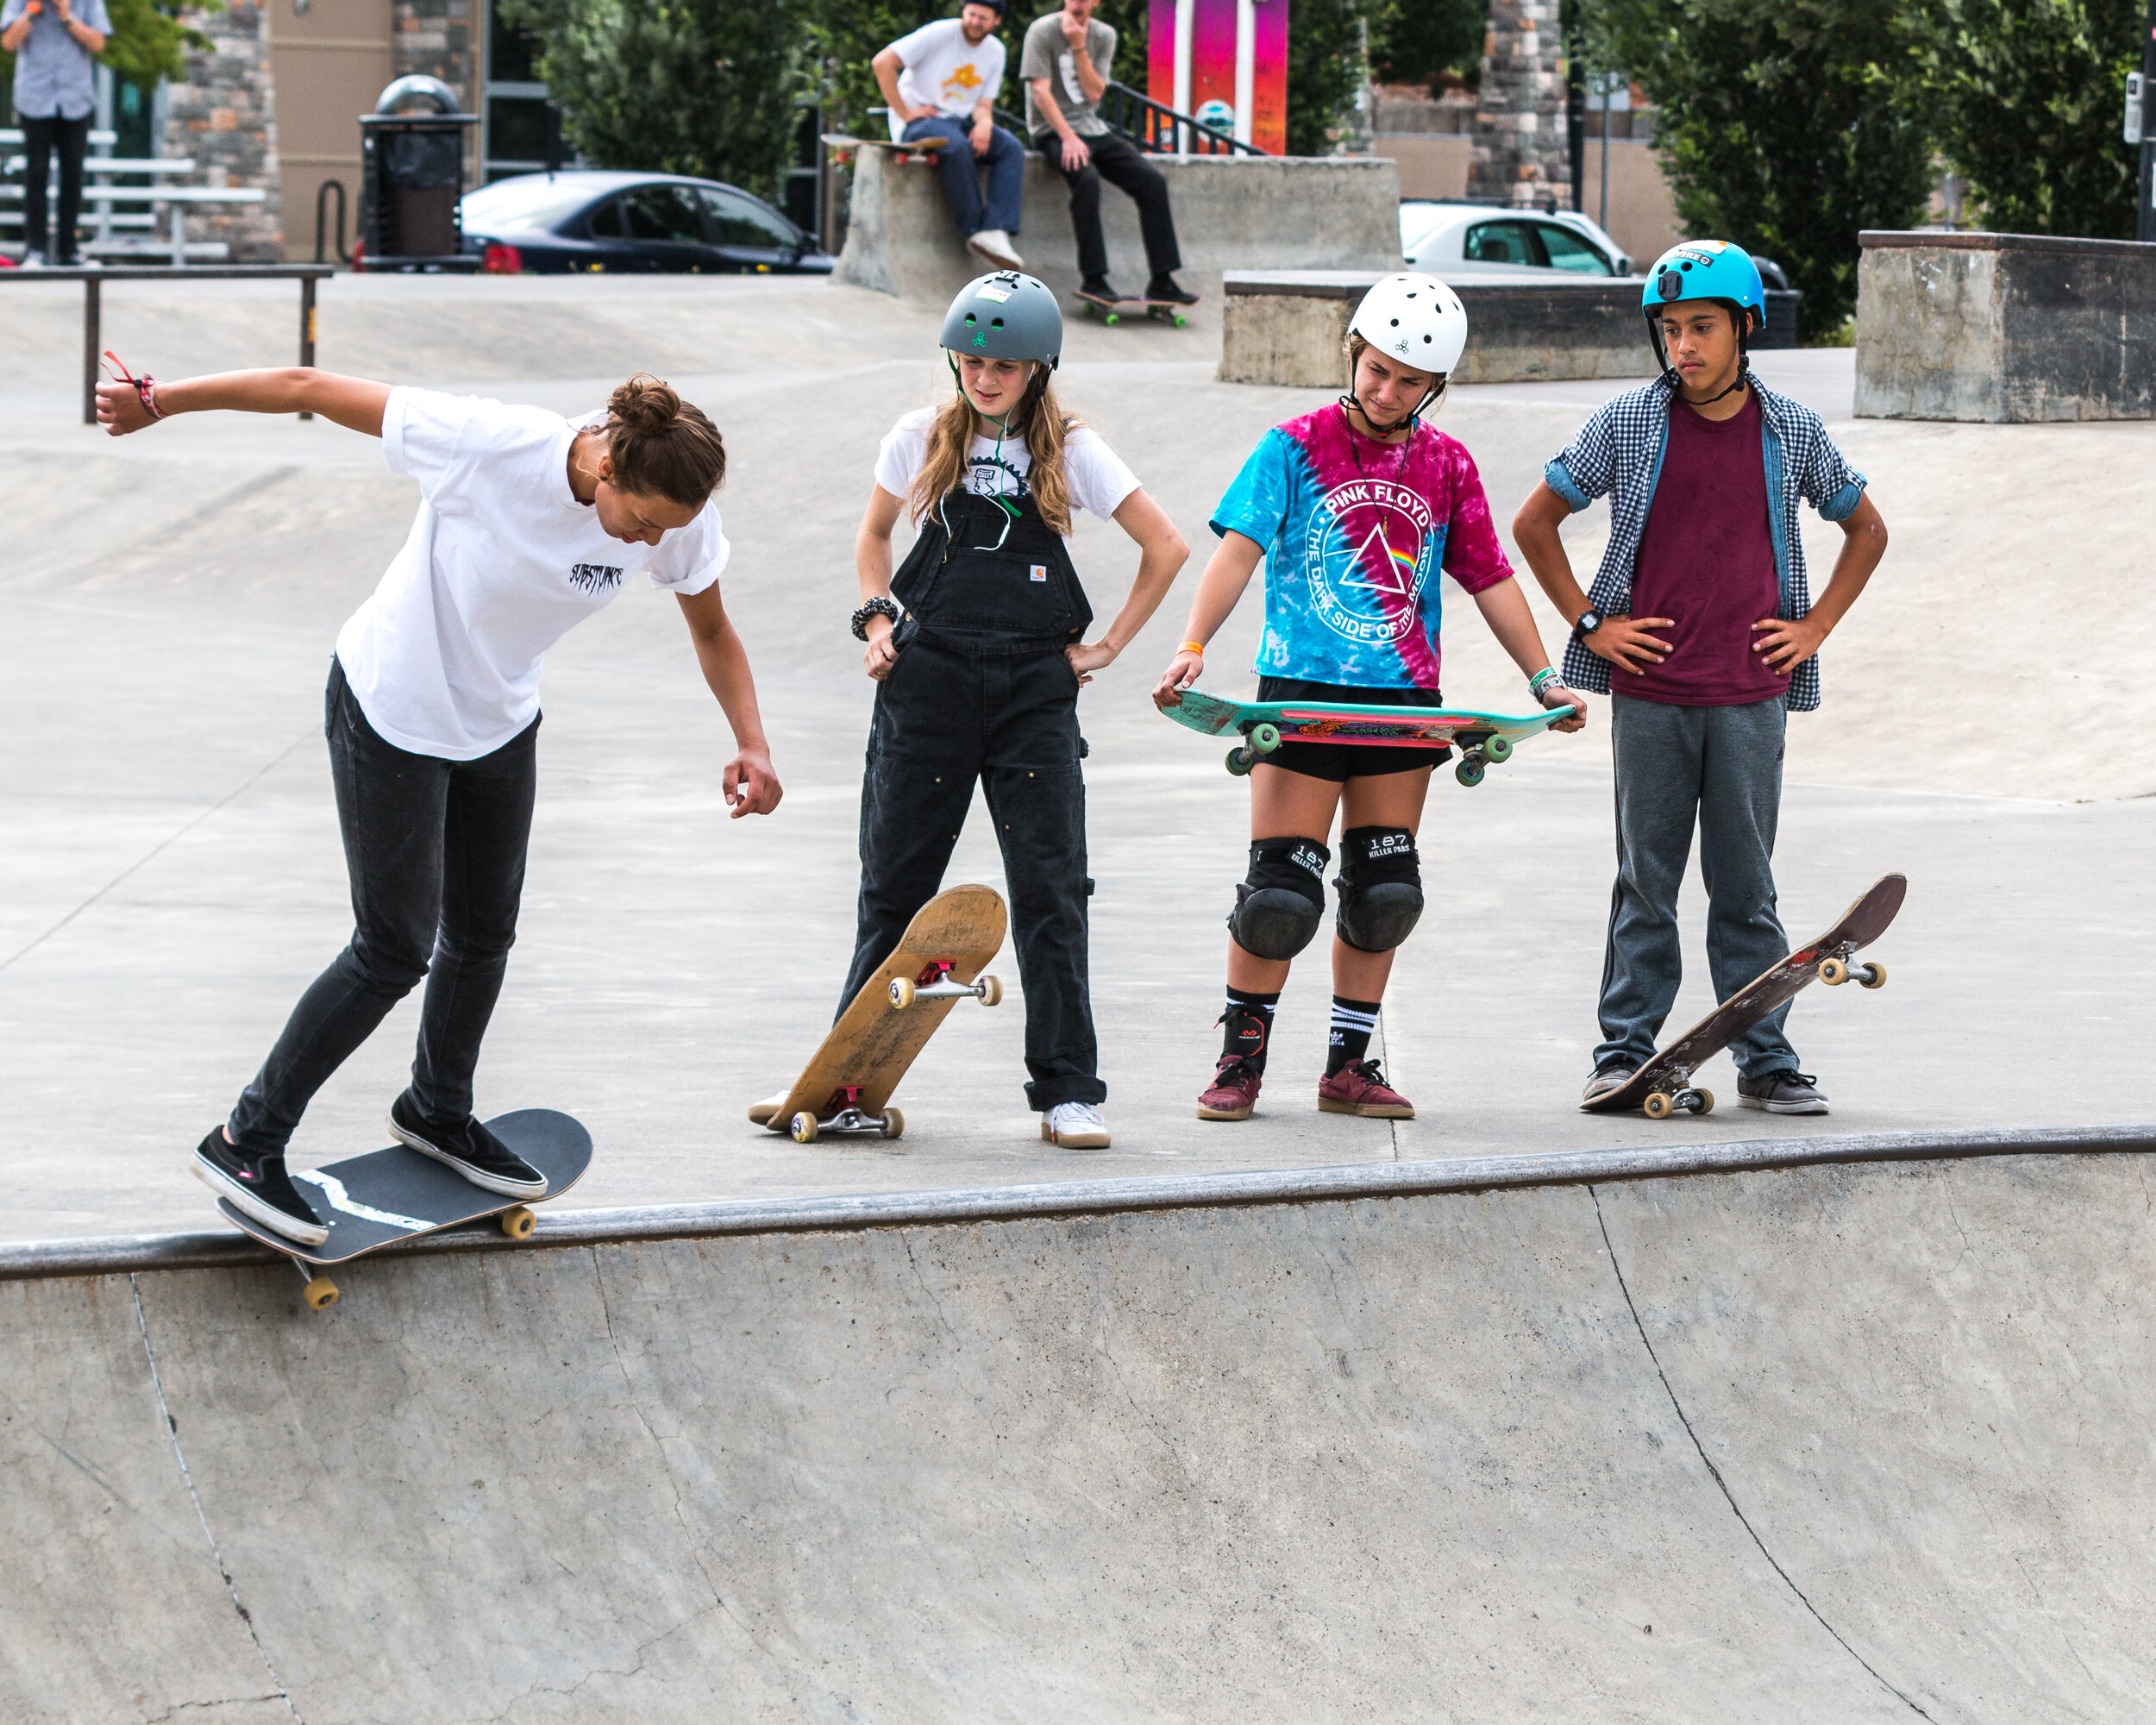 Seek-Skate-Camp-girls-skate-coach